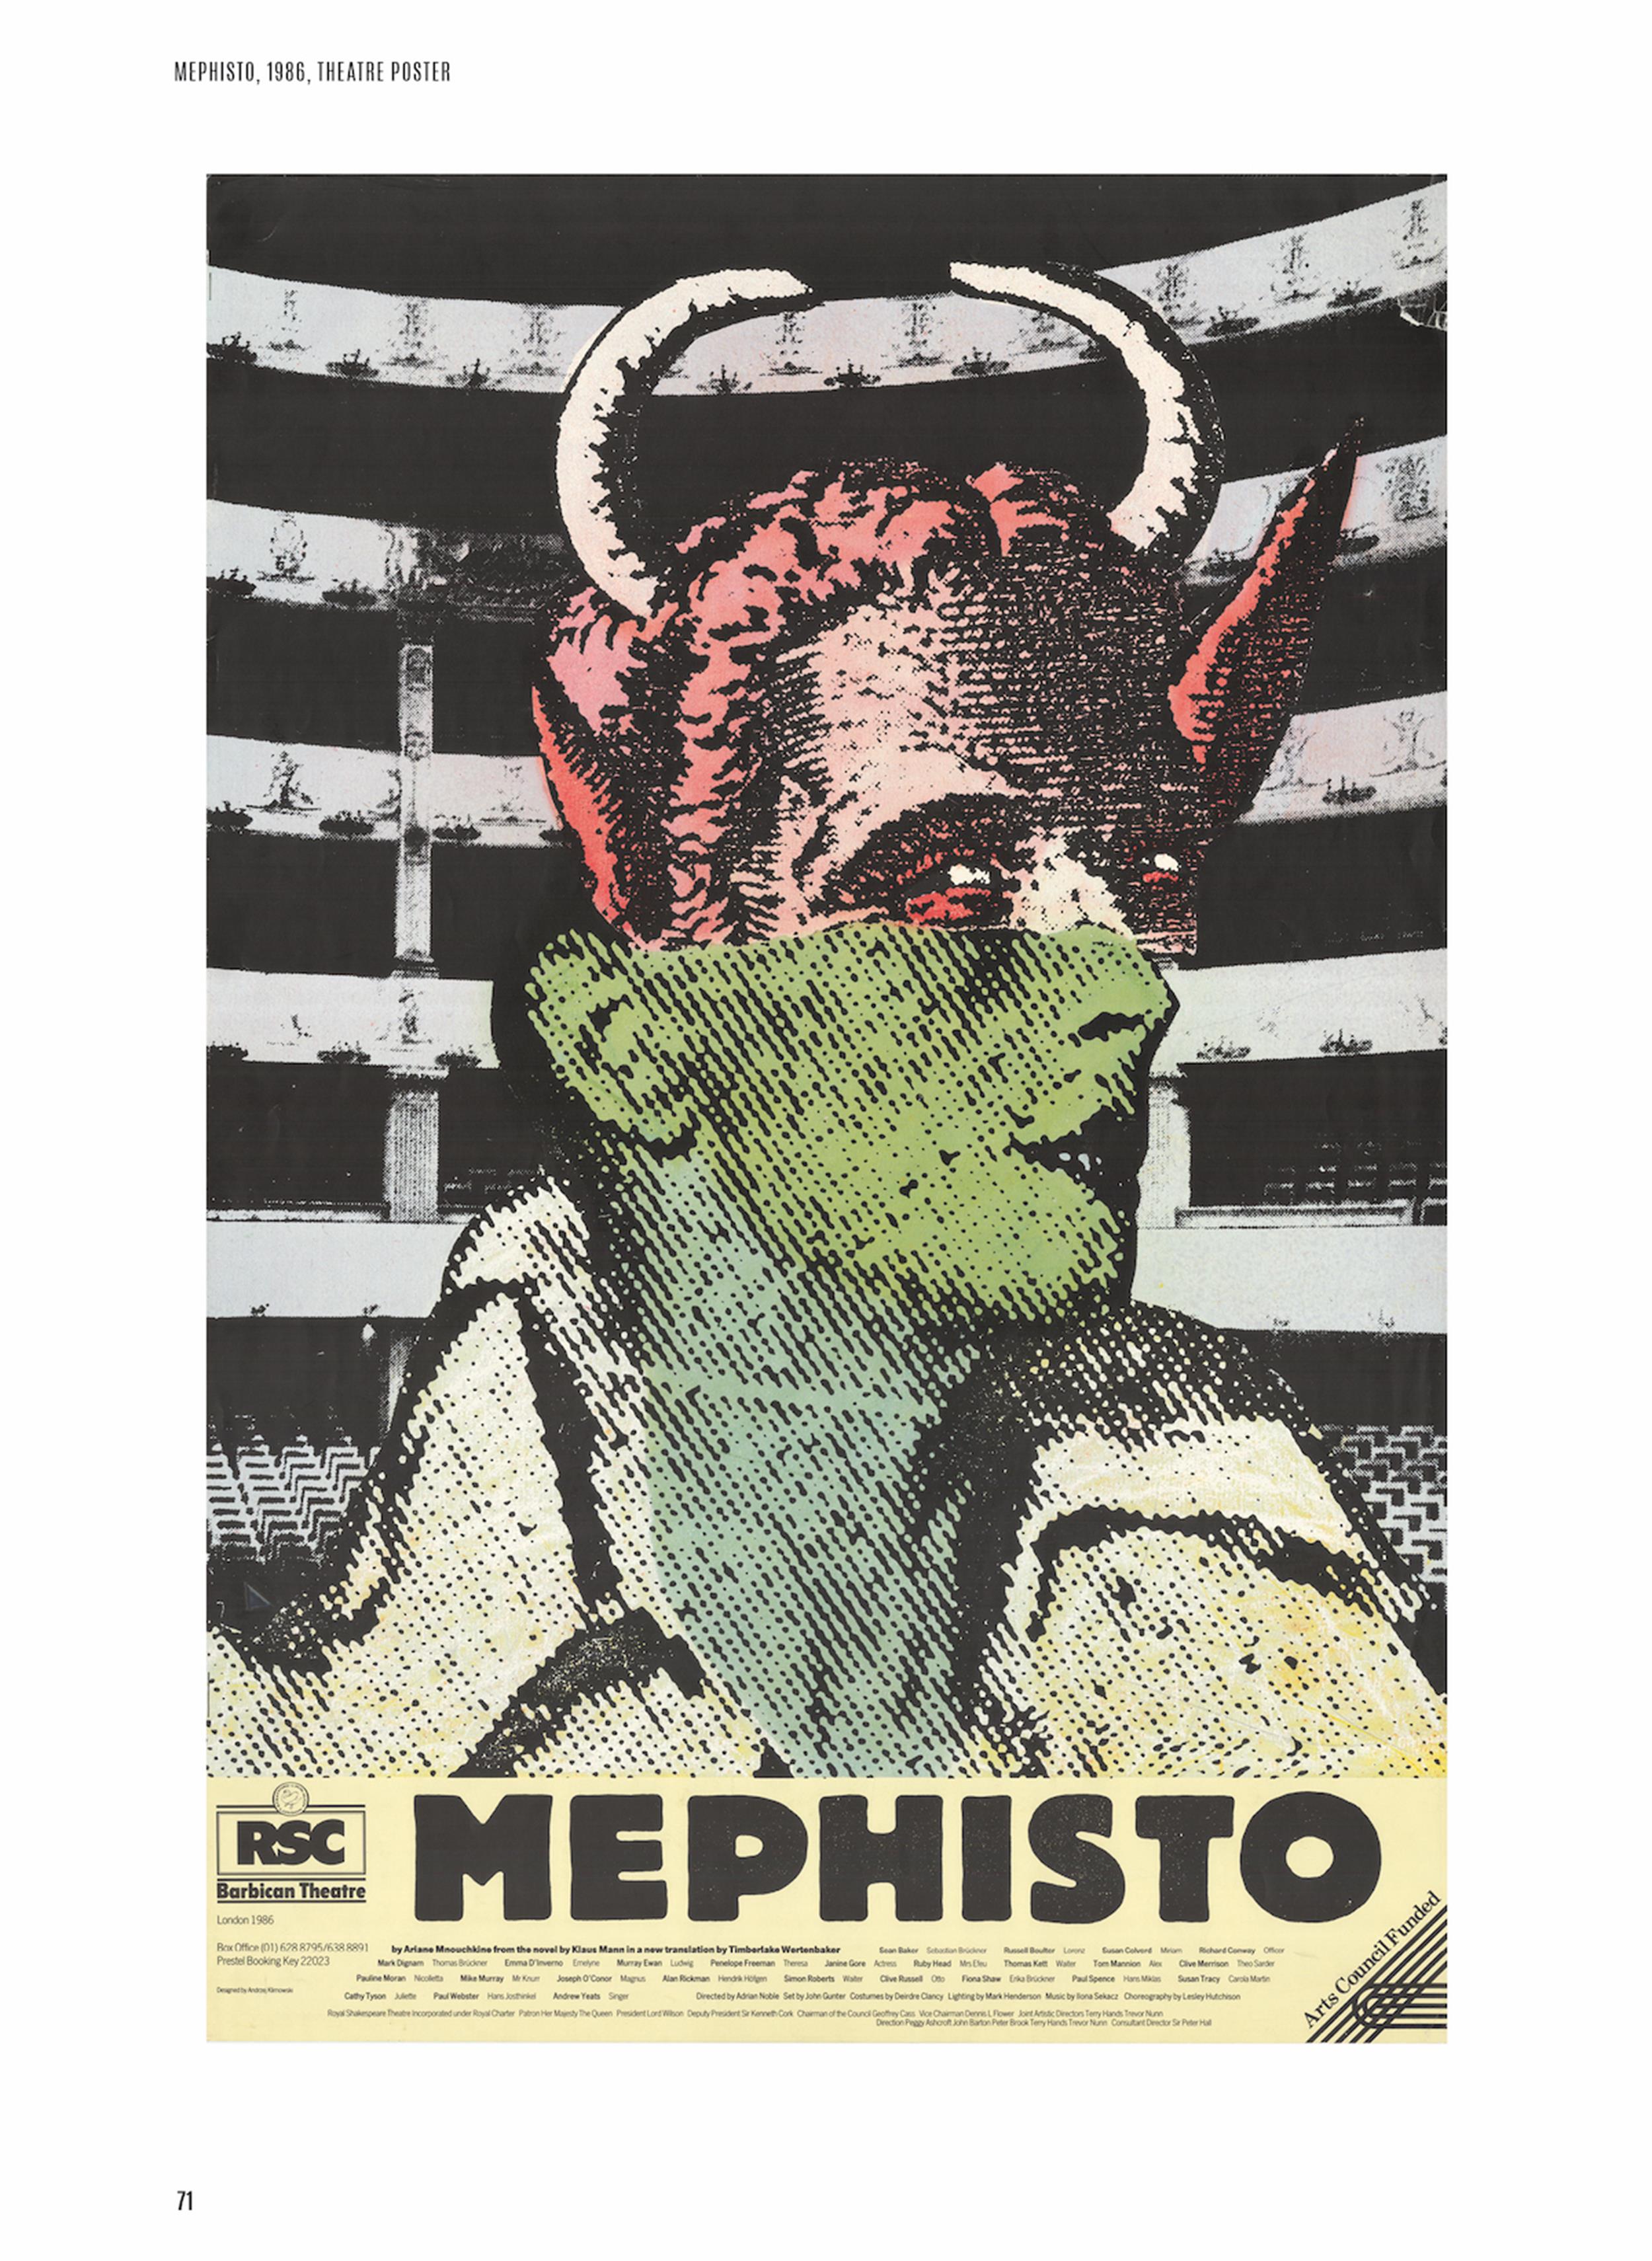 Andrzej Klimowski, Mephisto, plakat teatralny, 1986 